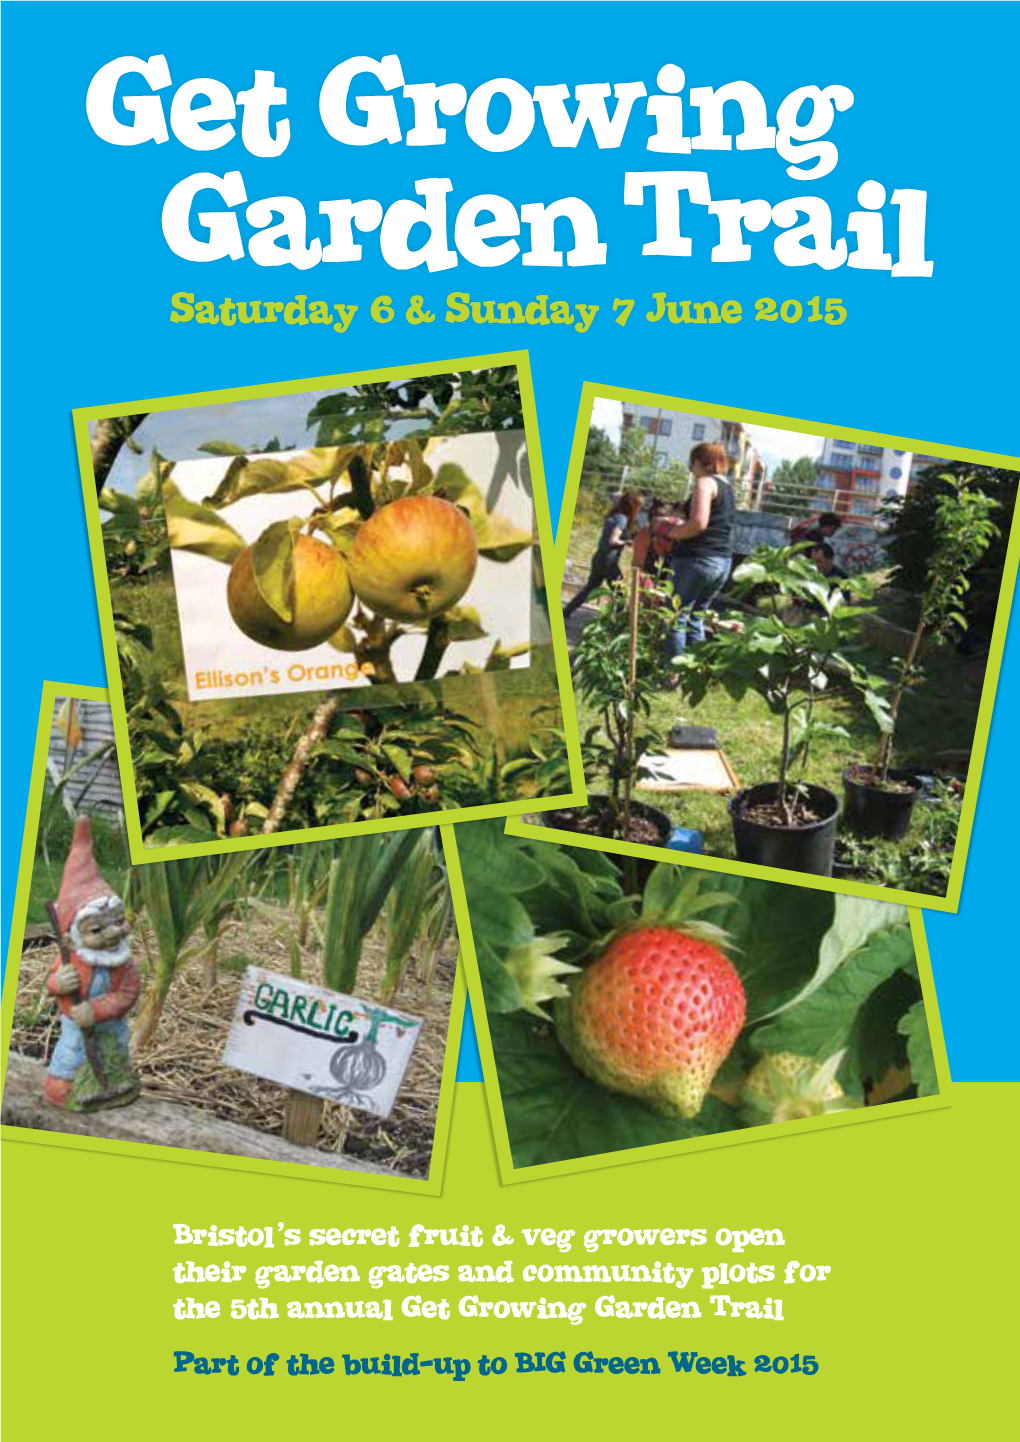 Get Growing Garden Trail Saturday 6 & Sunday 7 June 2015